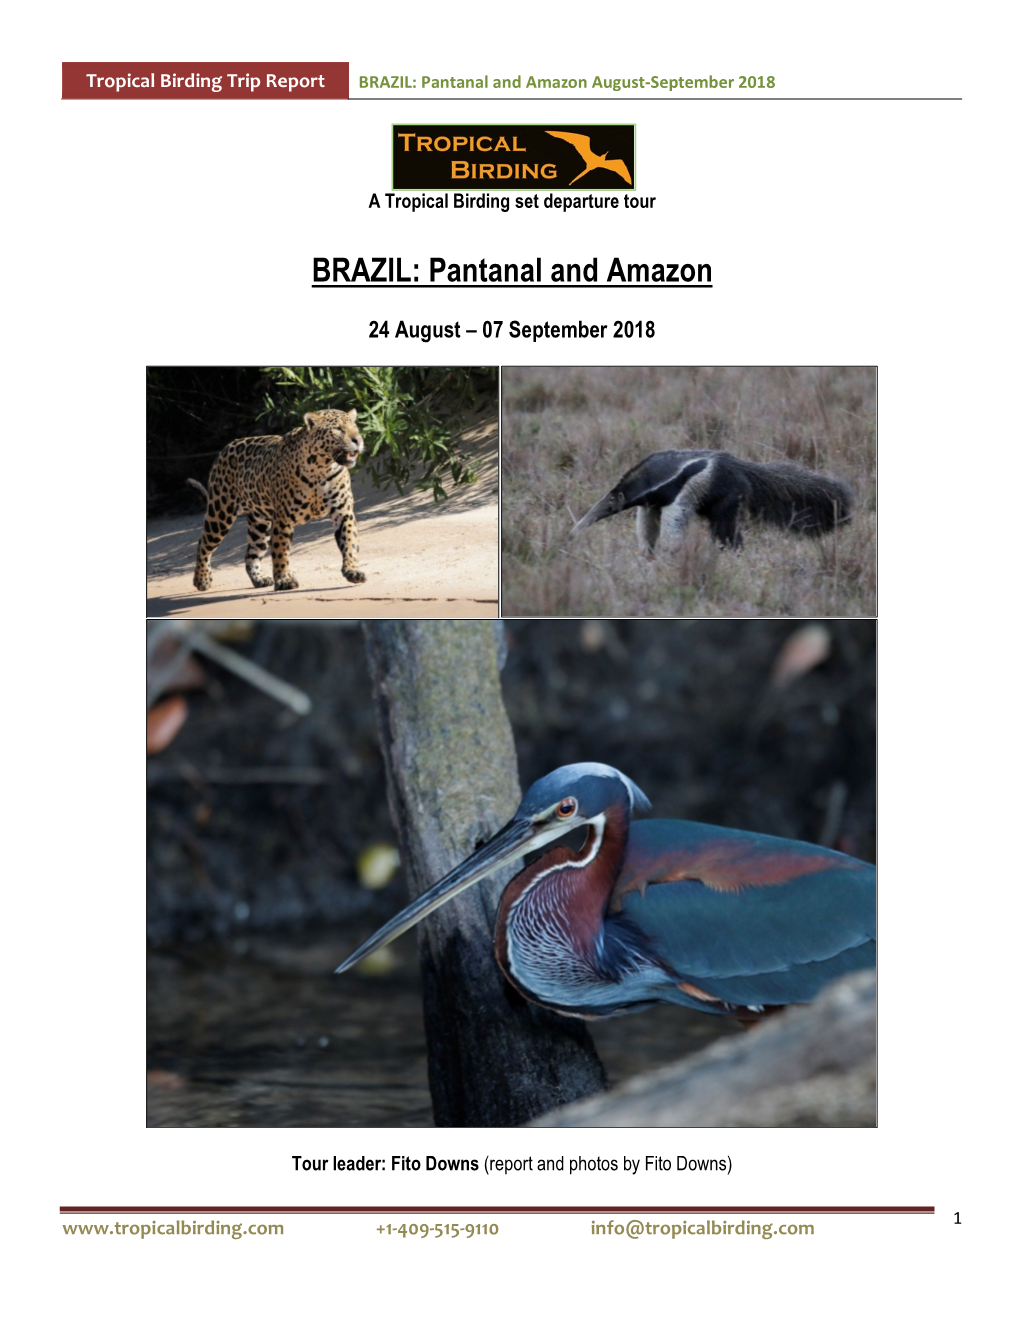 BRAZIL: Pantanal and Amazon August-September 2018